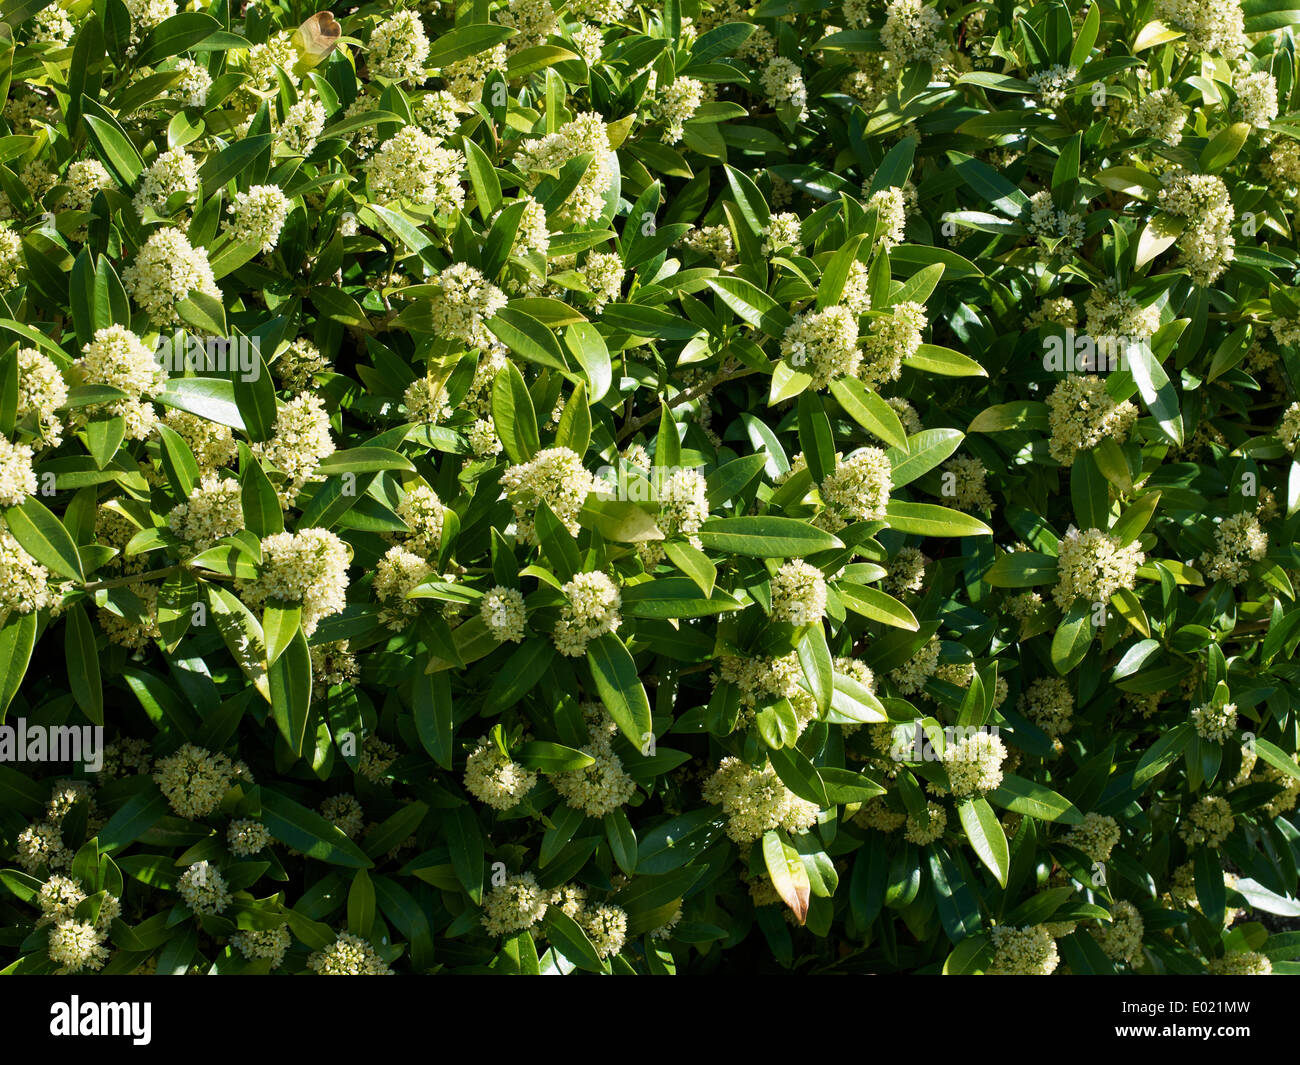 Skimmia x confusa 'Kew Green' shrub in flower Stock Photo